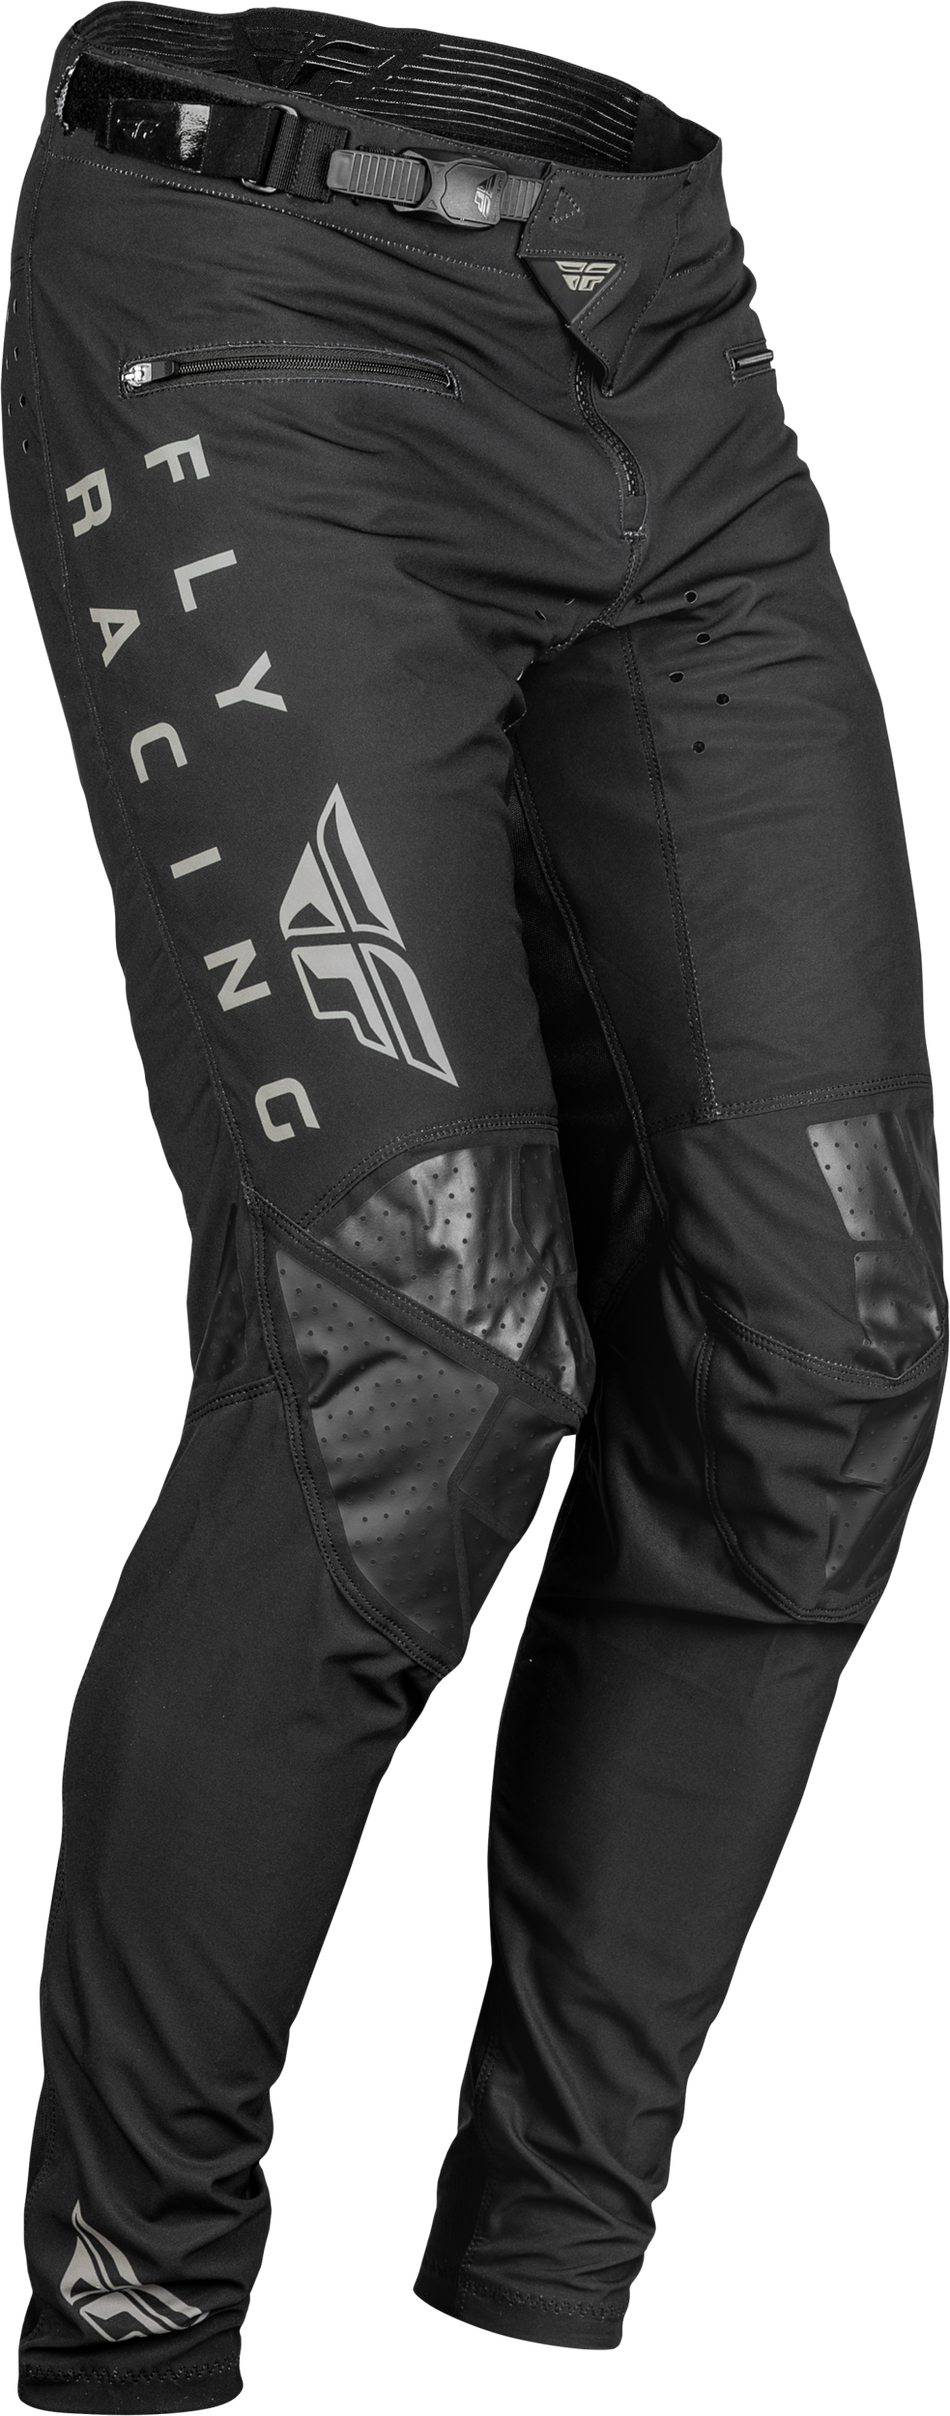 FLY RACING Radium Bicycle Pants Black/Grey Sz 28 376-04028